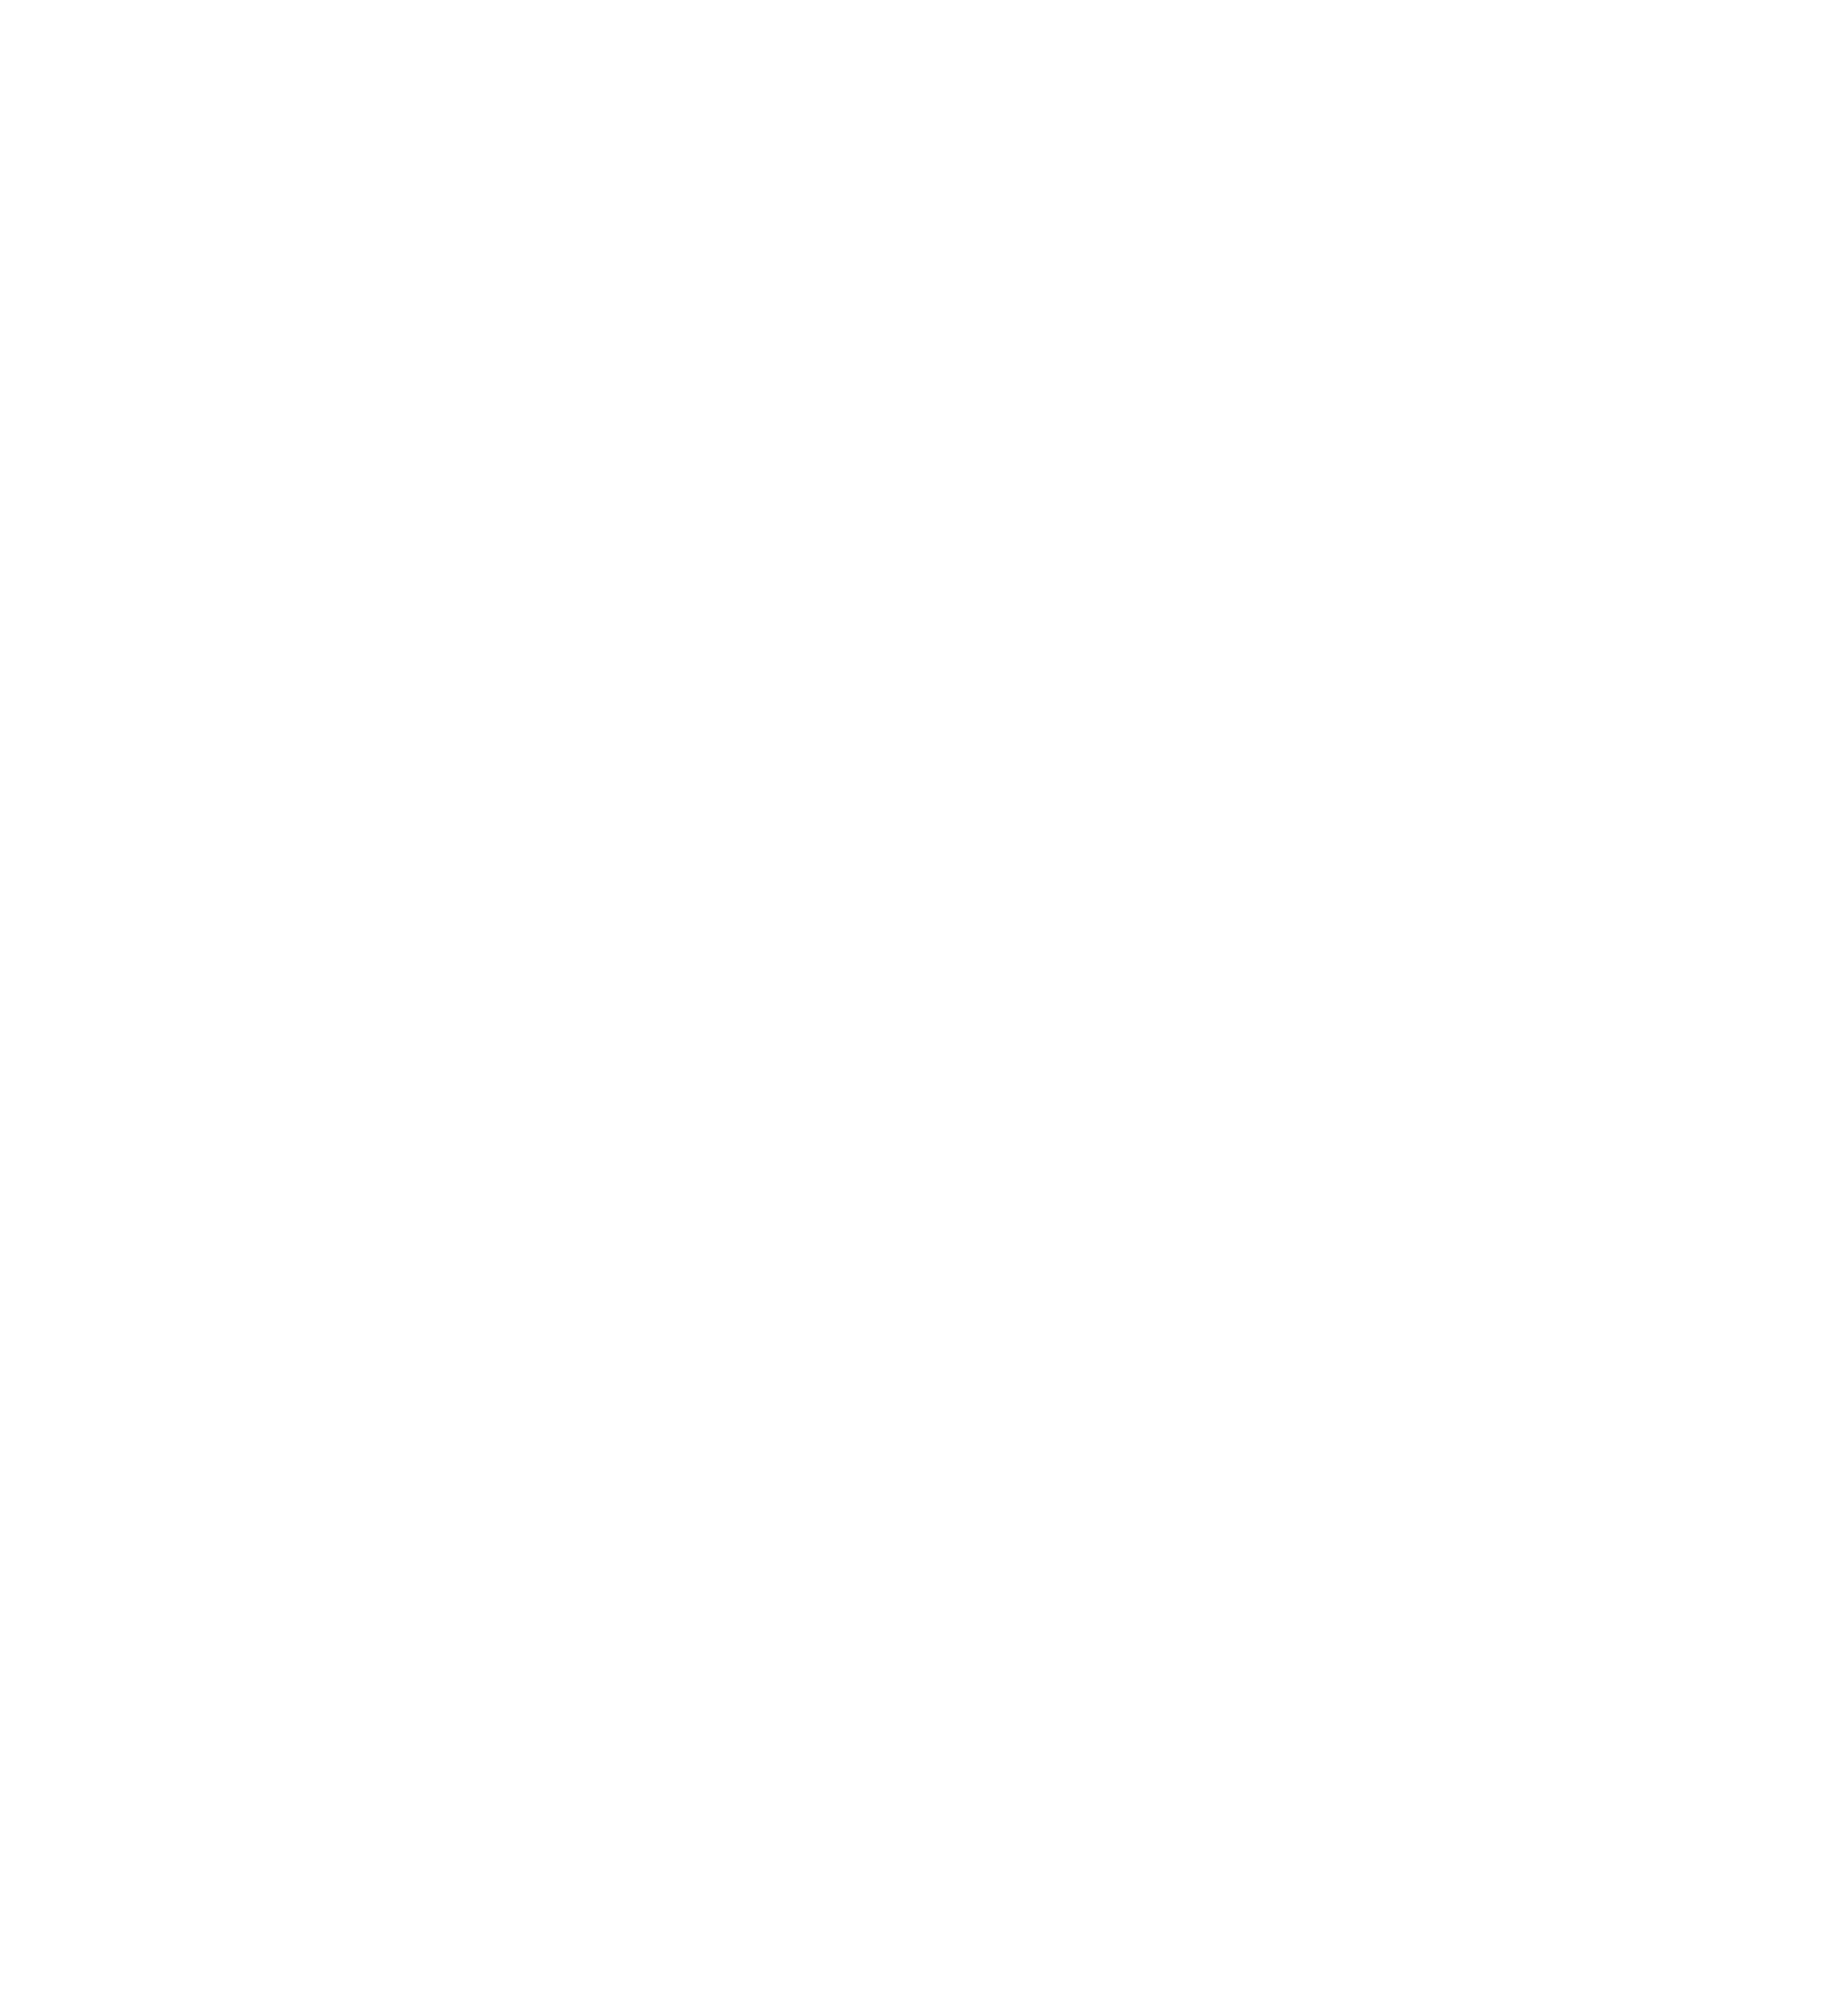 Lib&Co. Inc. | A Leader in Luxury & Elegant Lighting